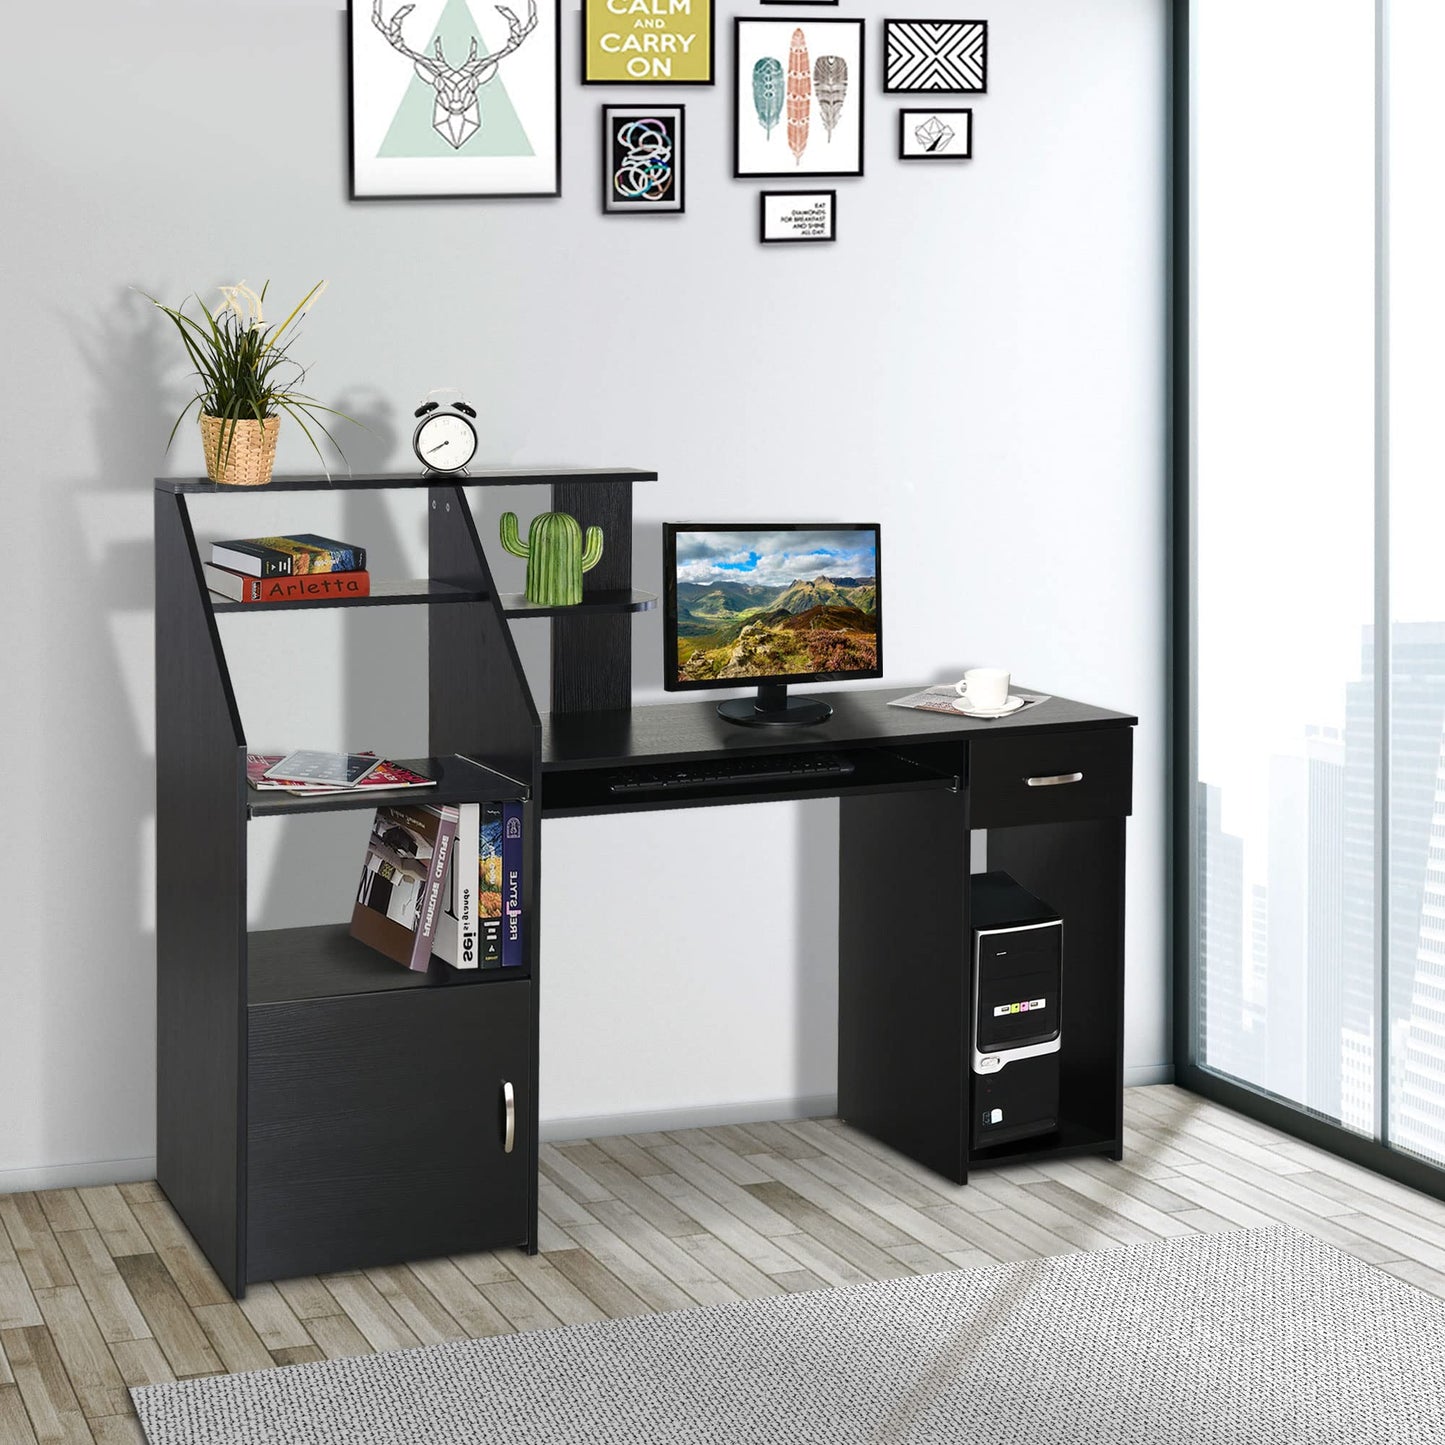 HOMCOM Computer Desk with Sliding Keyboard & Storage Shelves, Cabinet and Drawer, Home Office Gaming Table Workstation, Black Wood Grain